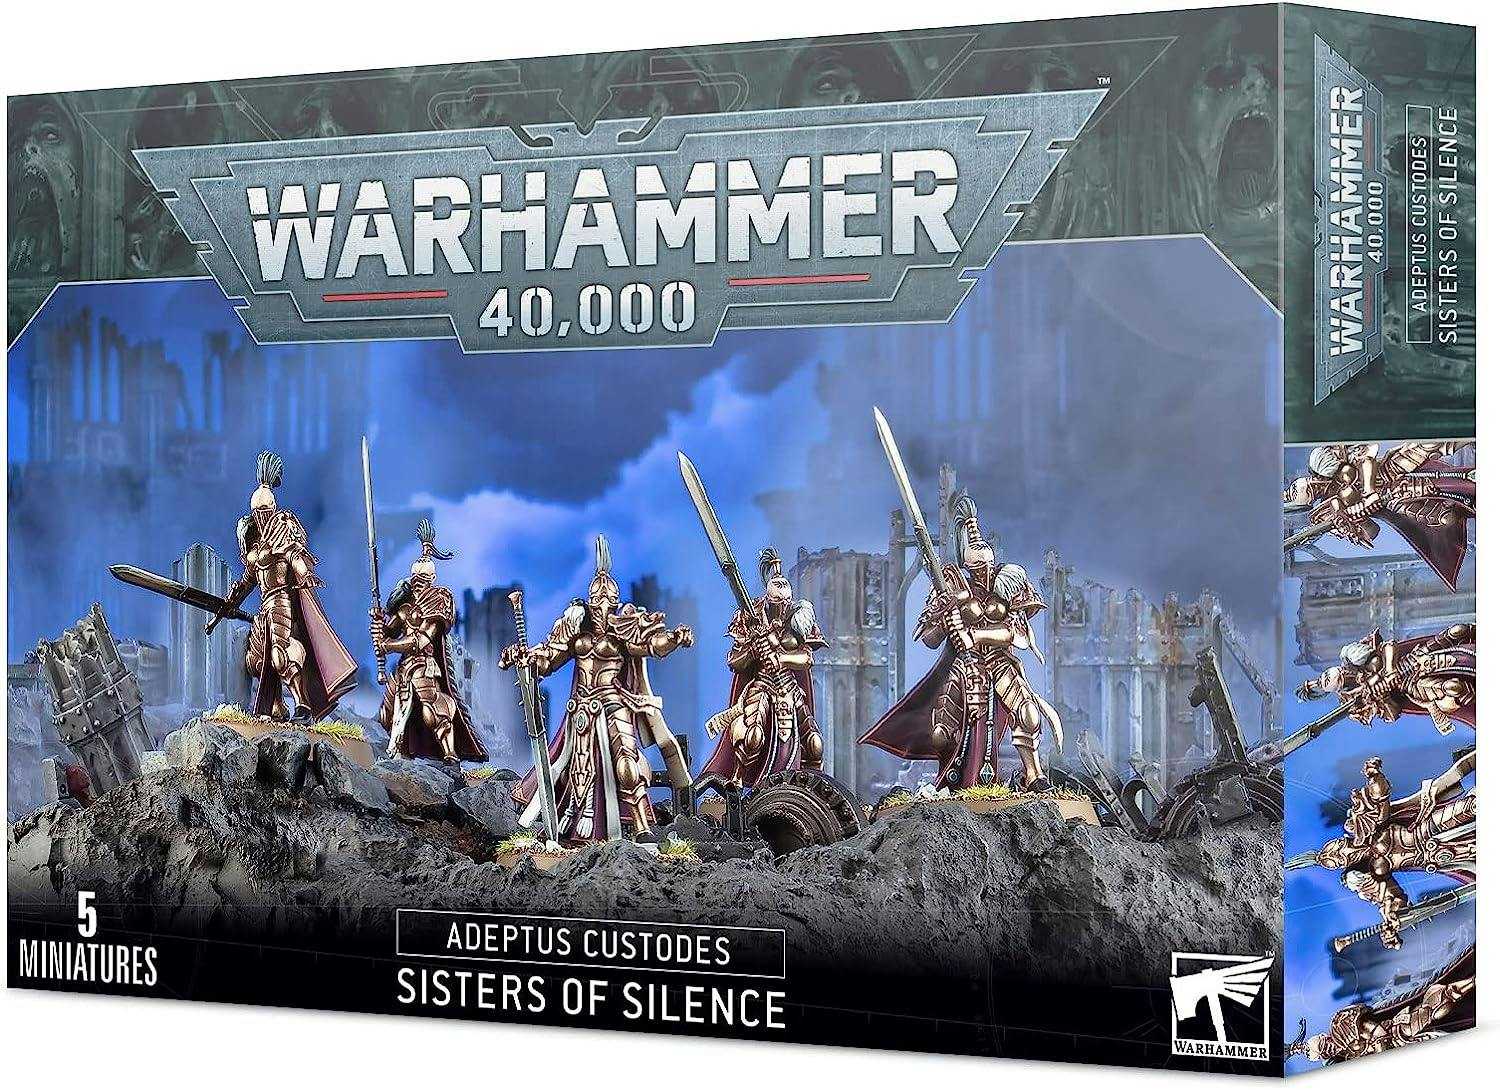 Warhammer 40,000: Adeptus Custodes - Sisters of Silence - 81mbmR-8wSL._AC_SL1500